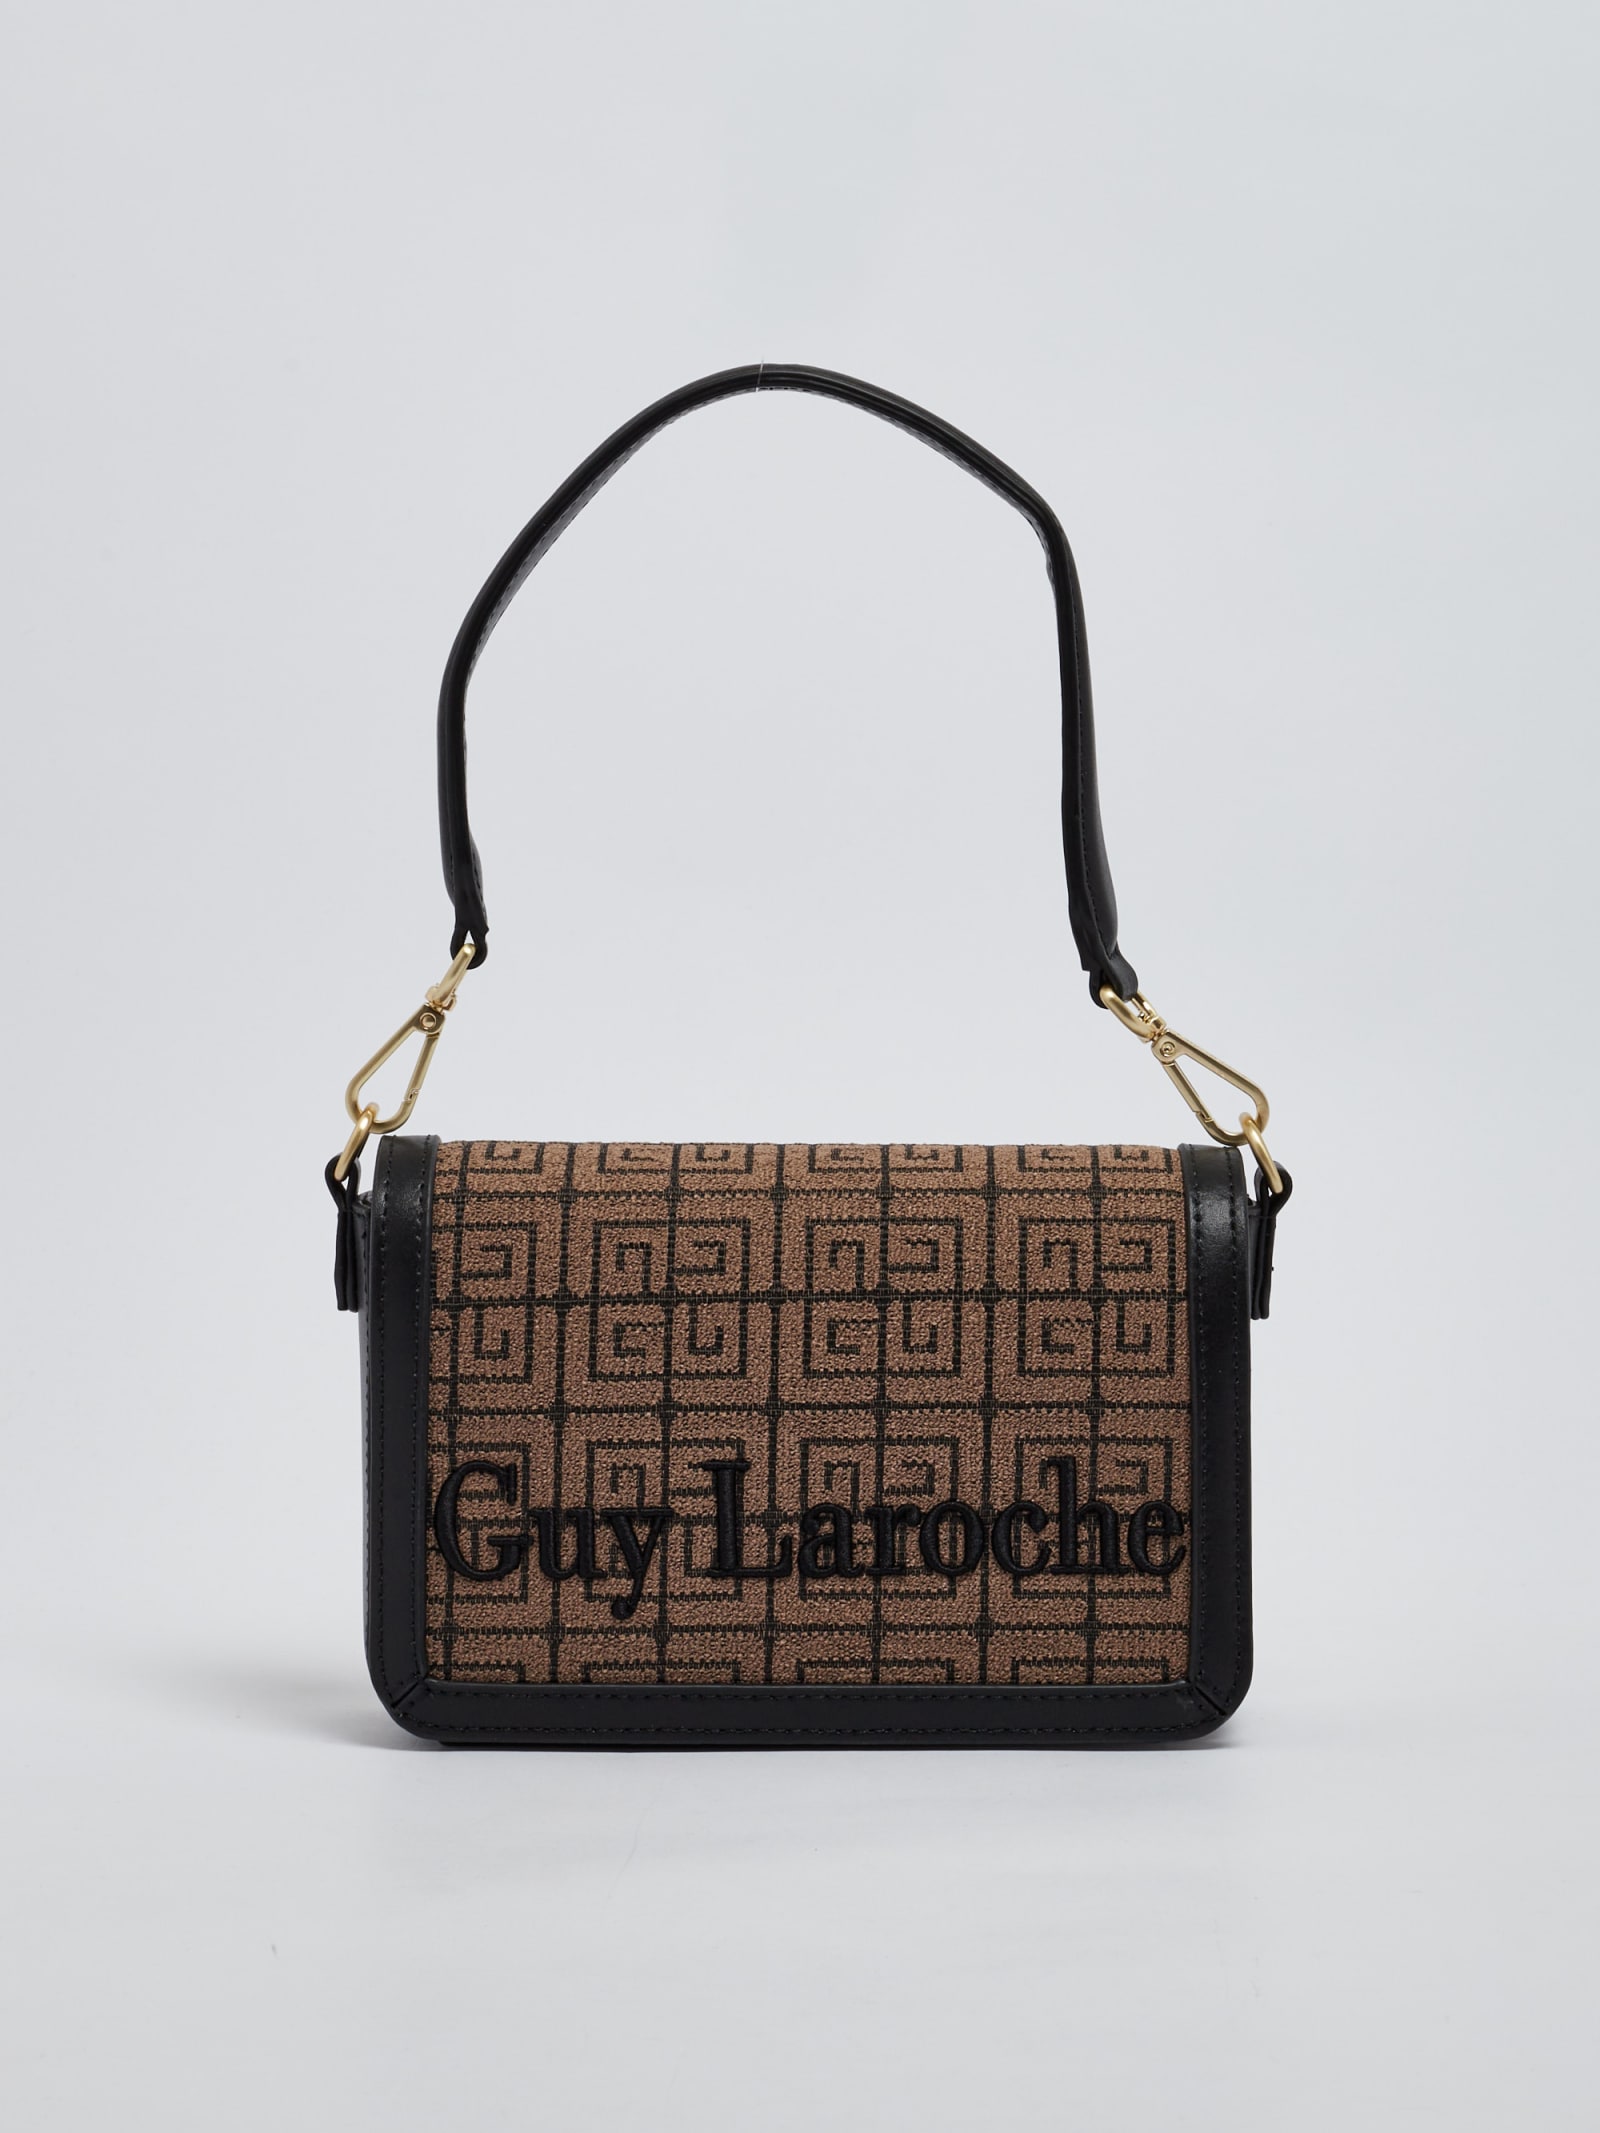 Guy laroche bags women's handbag 2015 first layer of cowhide